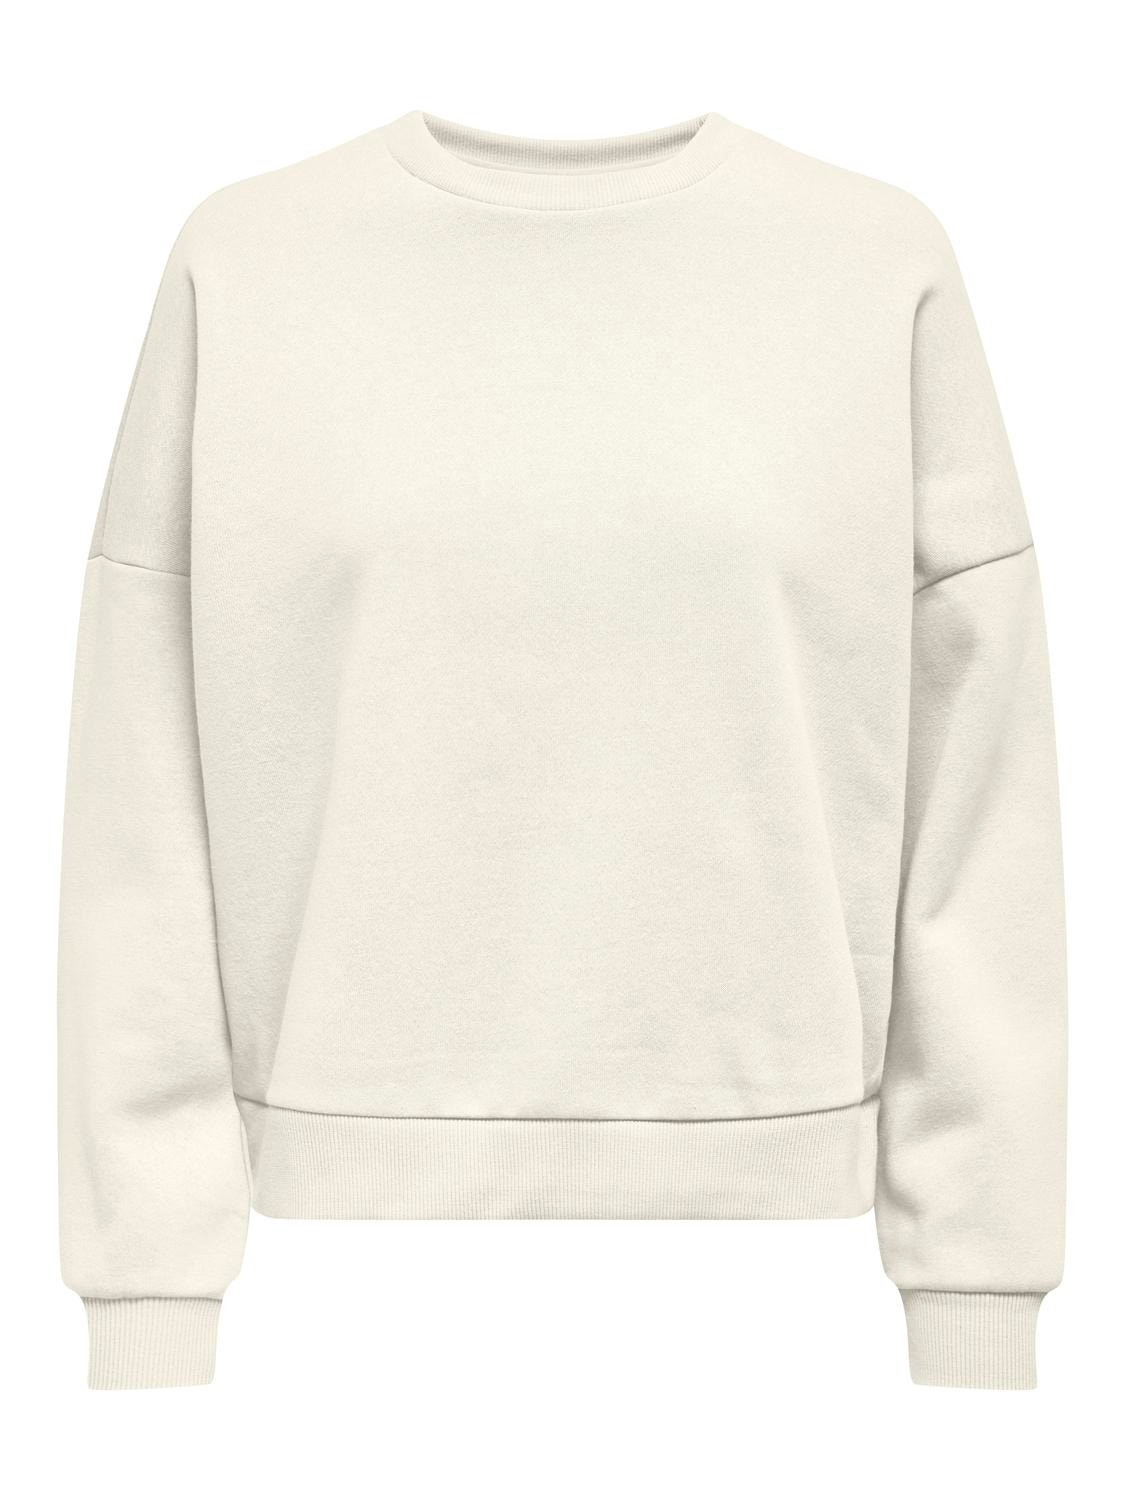 ONLY Solid color sweatshirt -Birch - 15321400